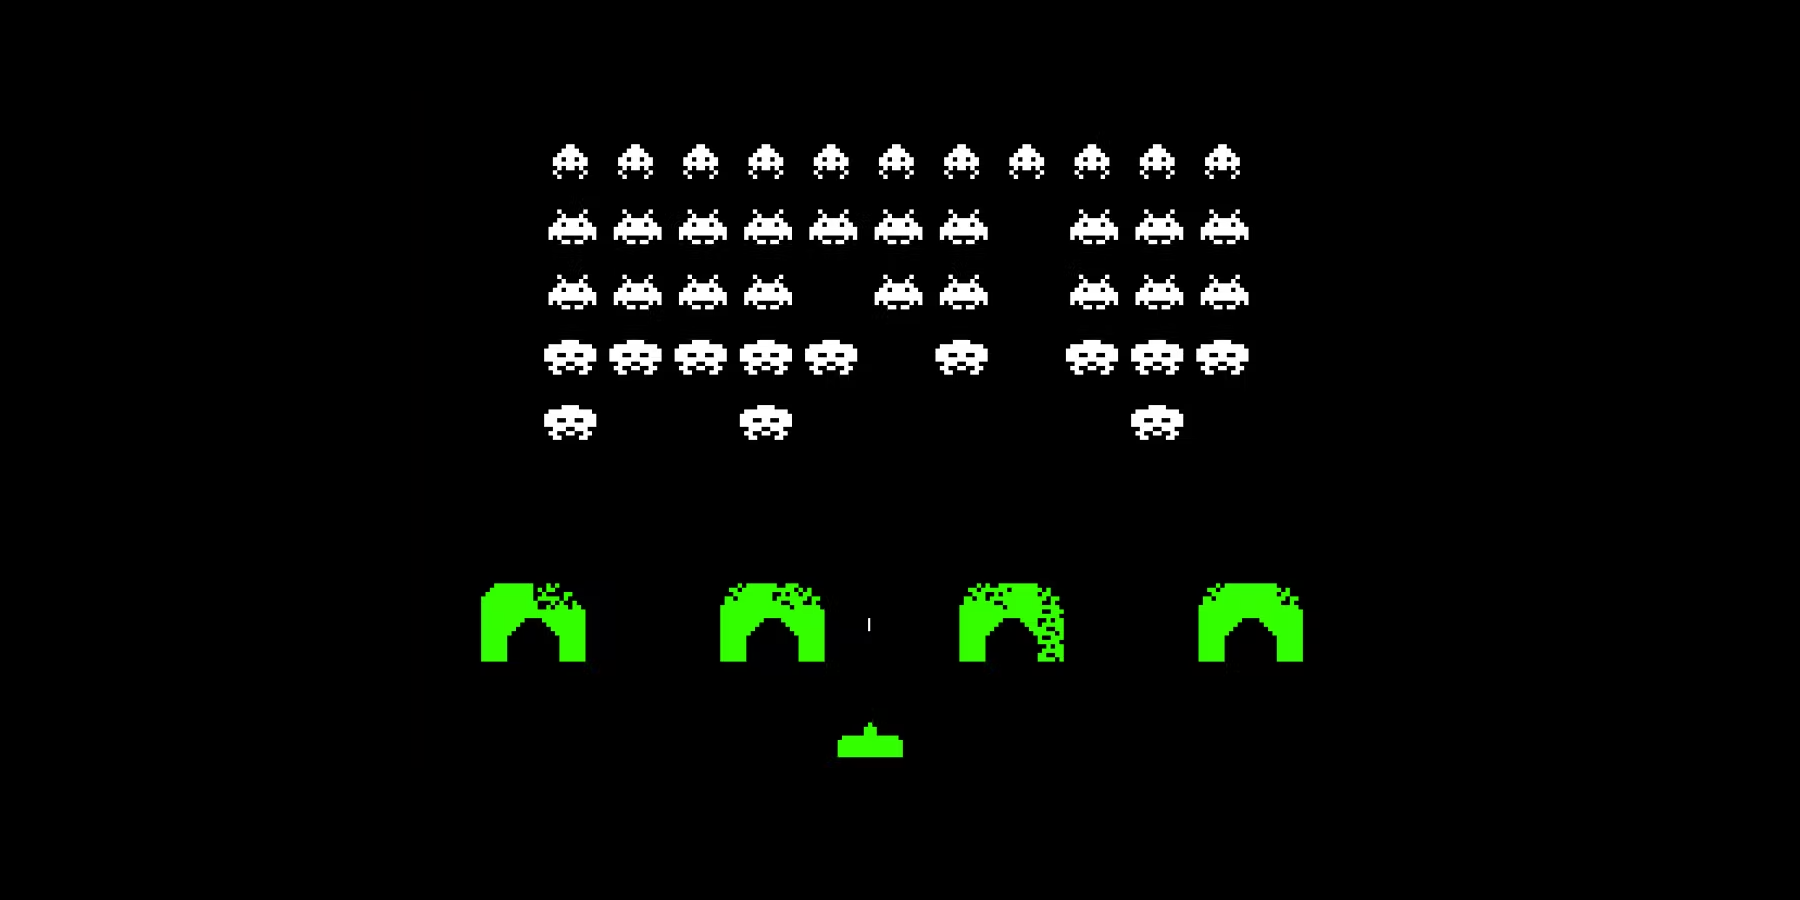 Space-Invaders-Classic-Gameplay-Screenshot